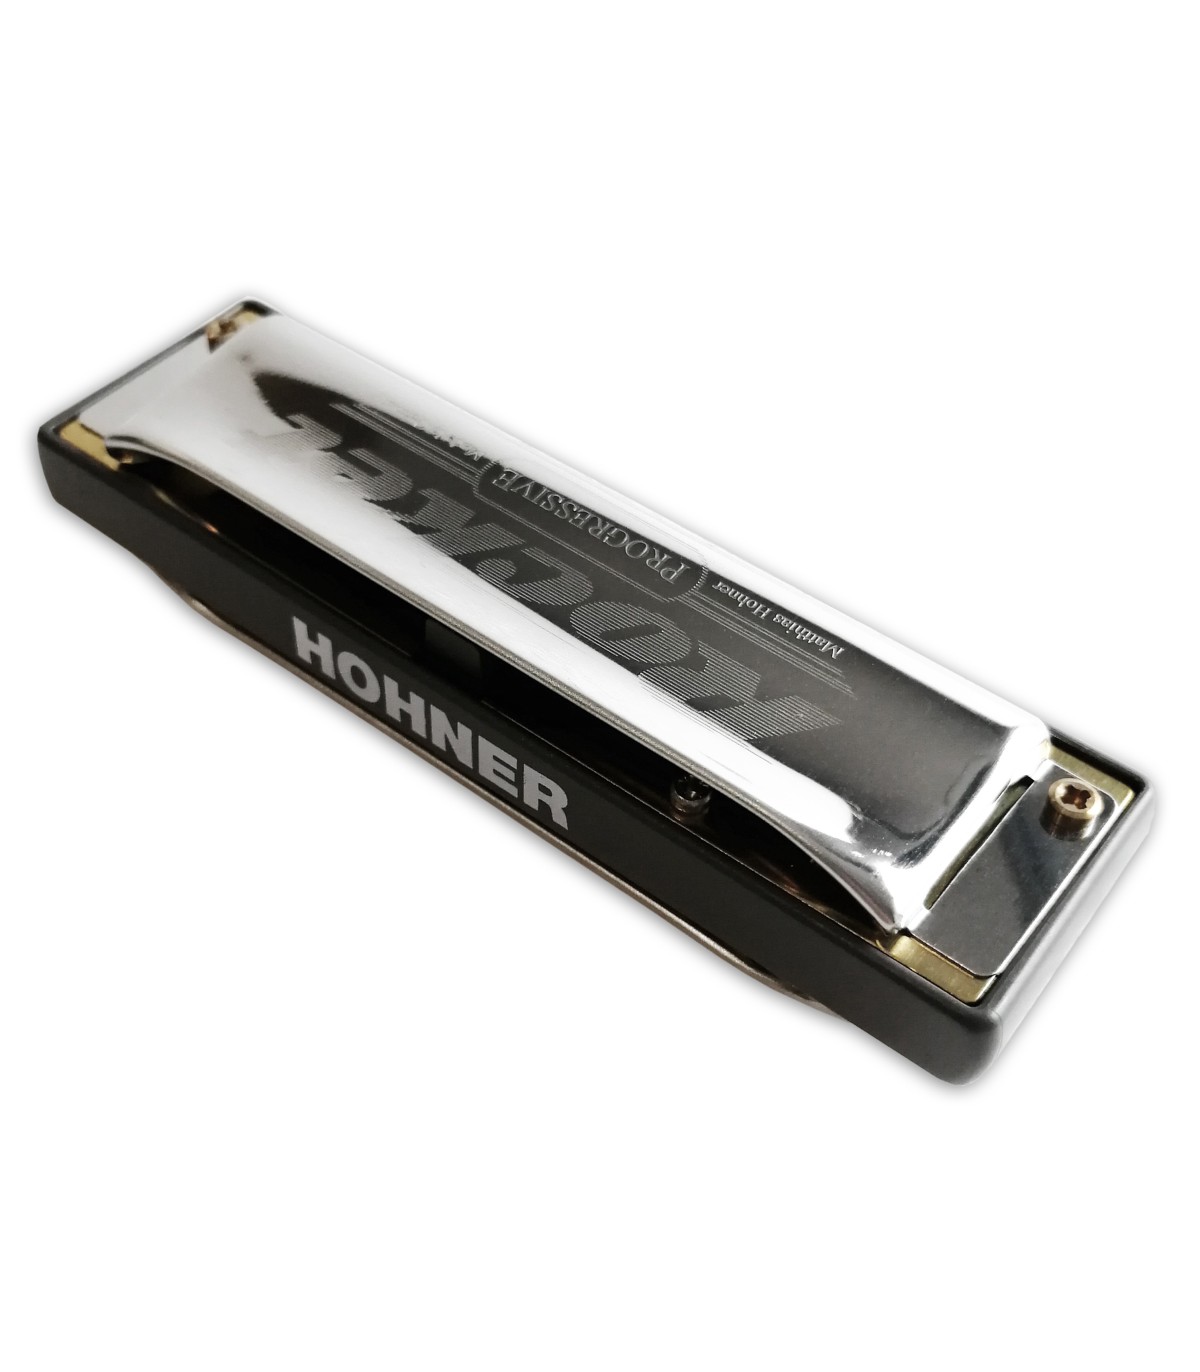 Hohner Rocket Harp Si 2013 20 B, Harmonica